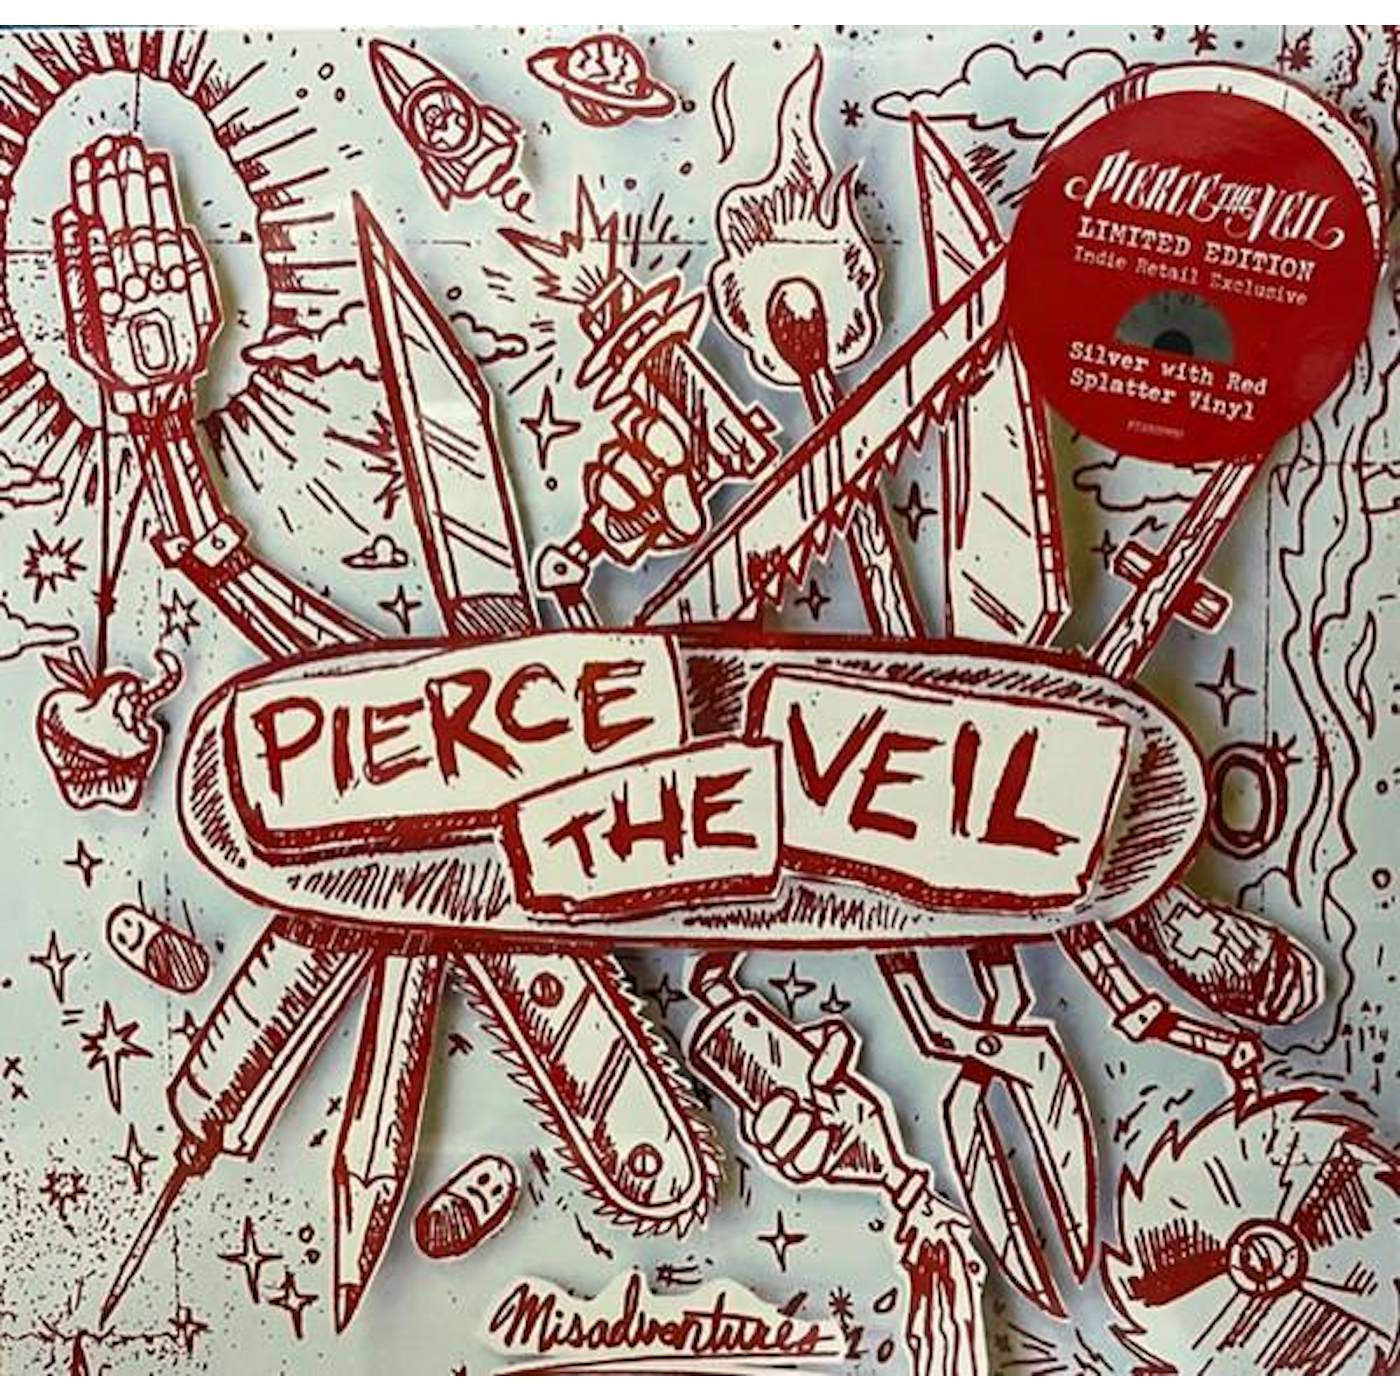 Pierce The Veil MISADVENTURES (SILVER WITH RED SPLATTER VINYL) Vinyl Record